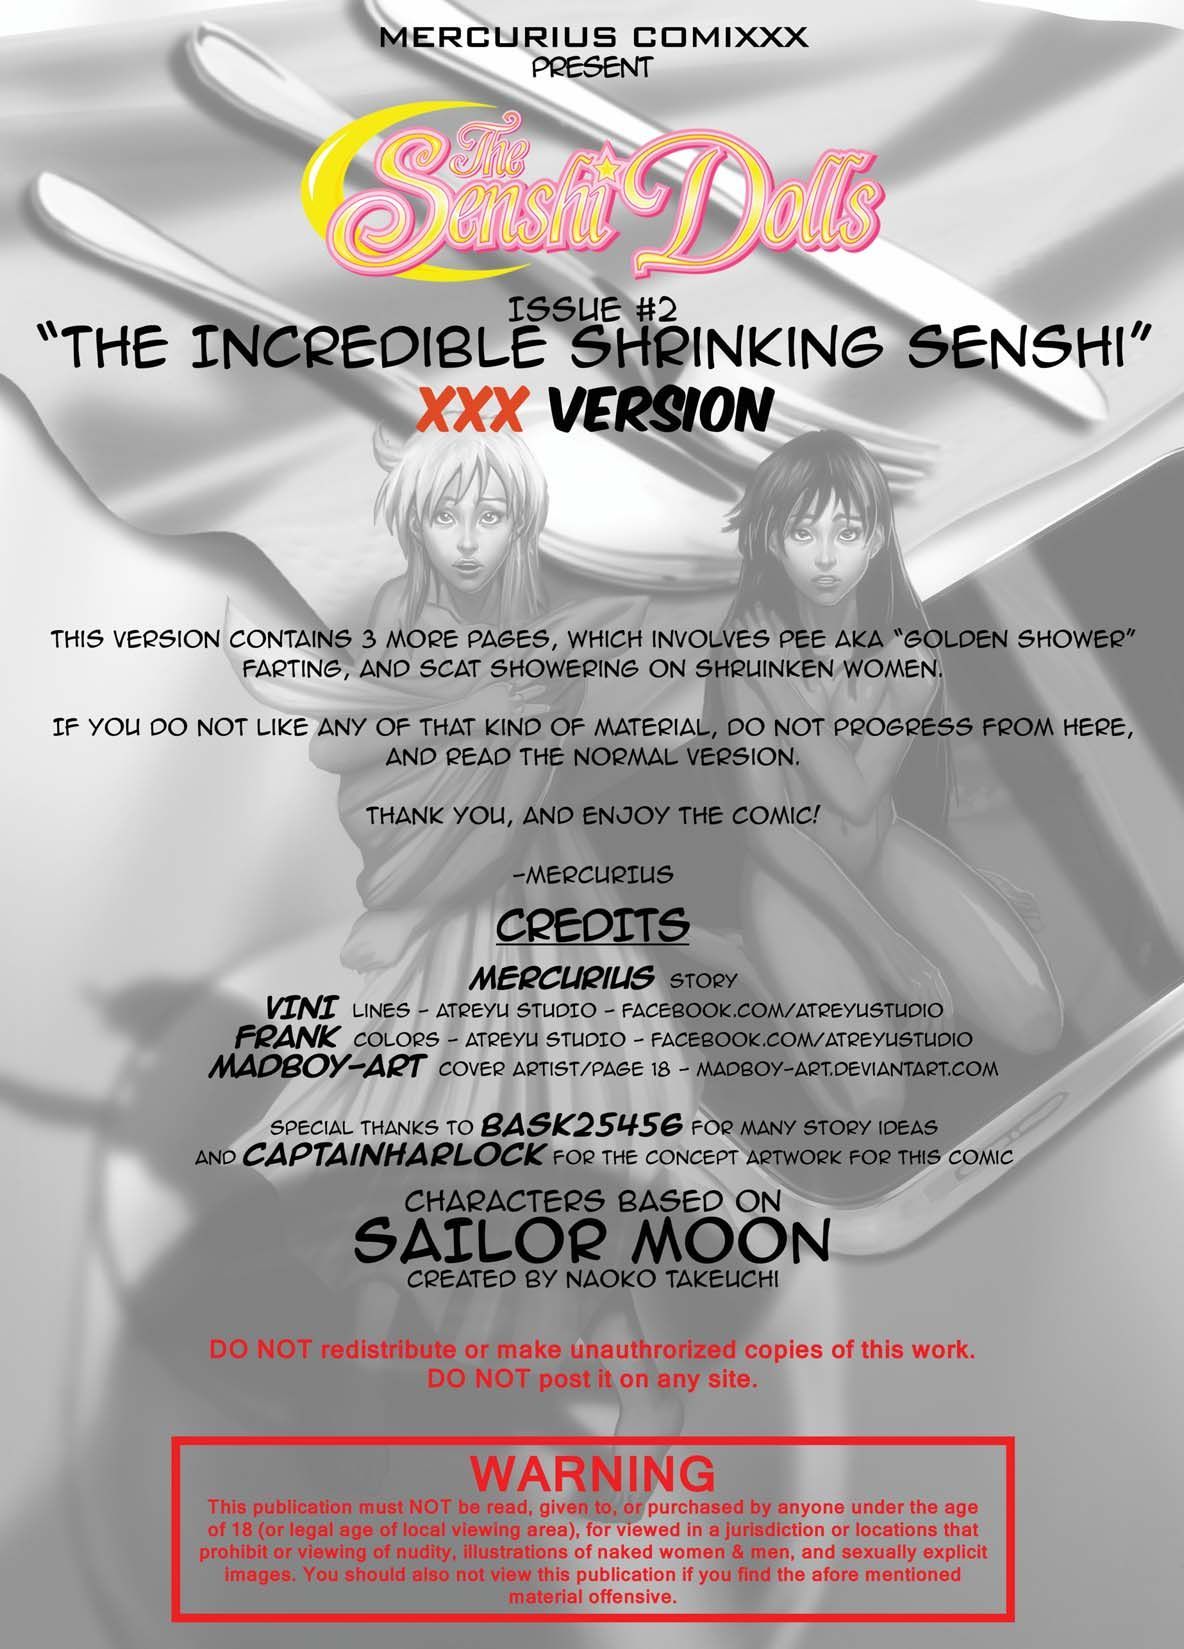 The Senshi Dolls #2 The Incredible Shrinking Senshi page 2